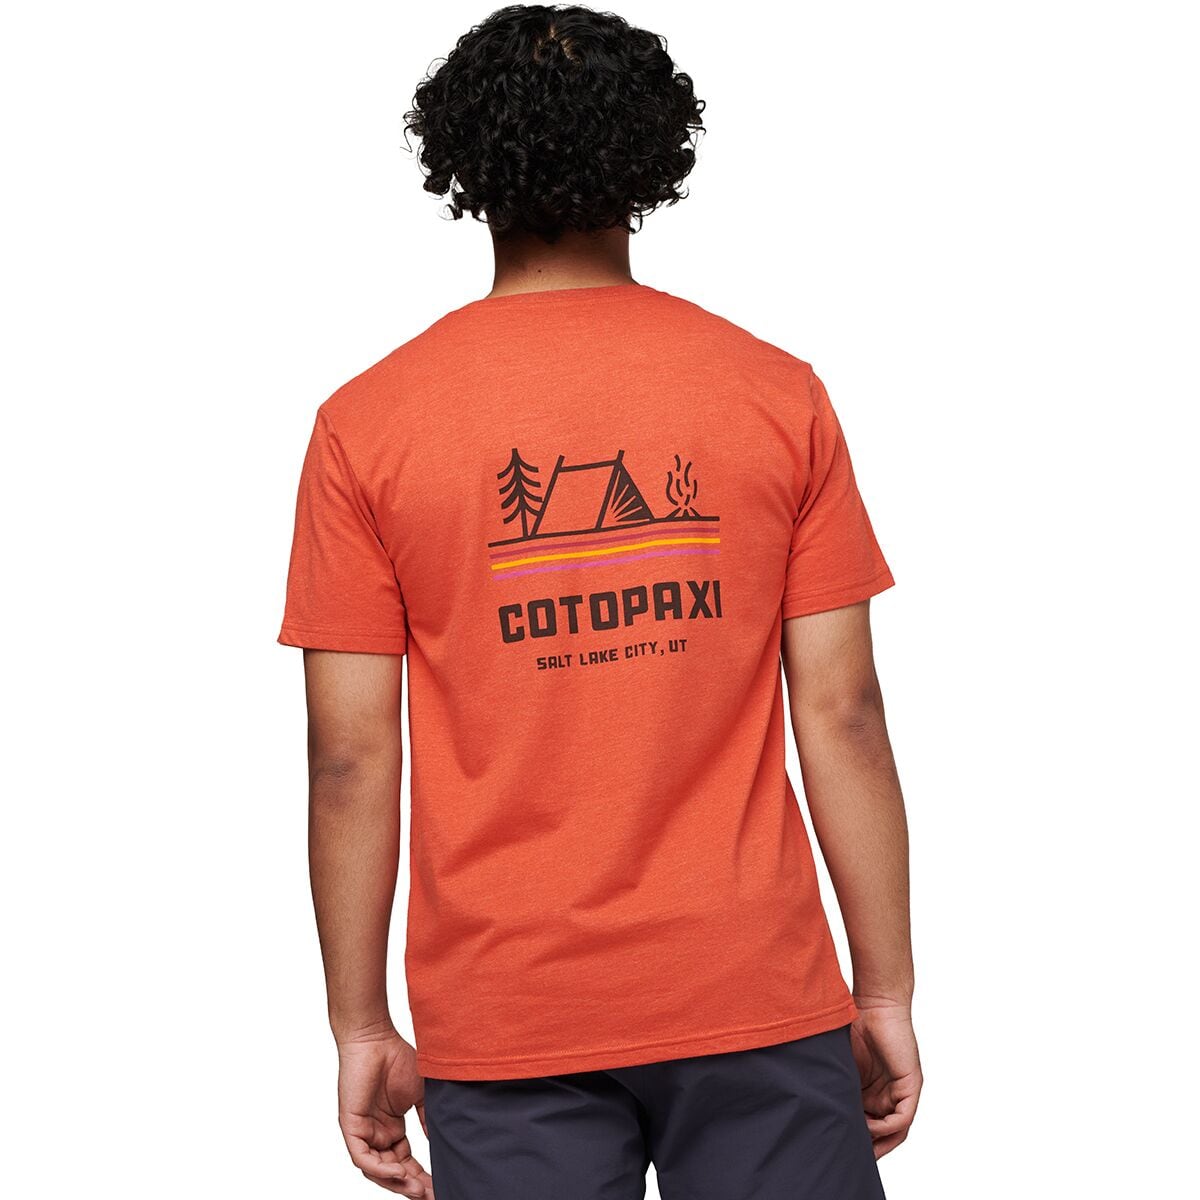 Cotopaxi Camp Life T-Shirt - Men's